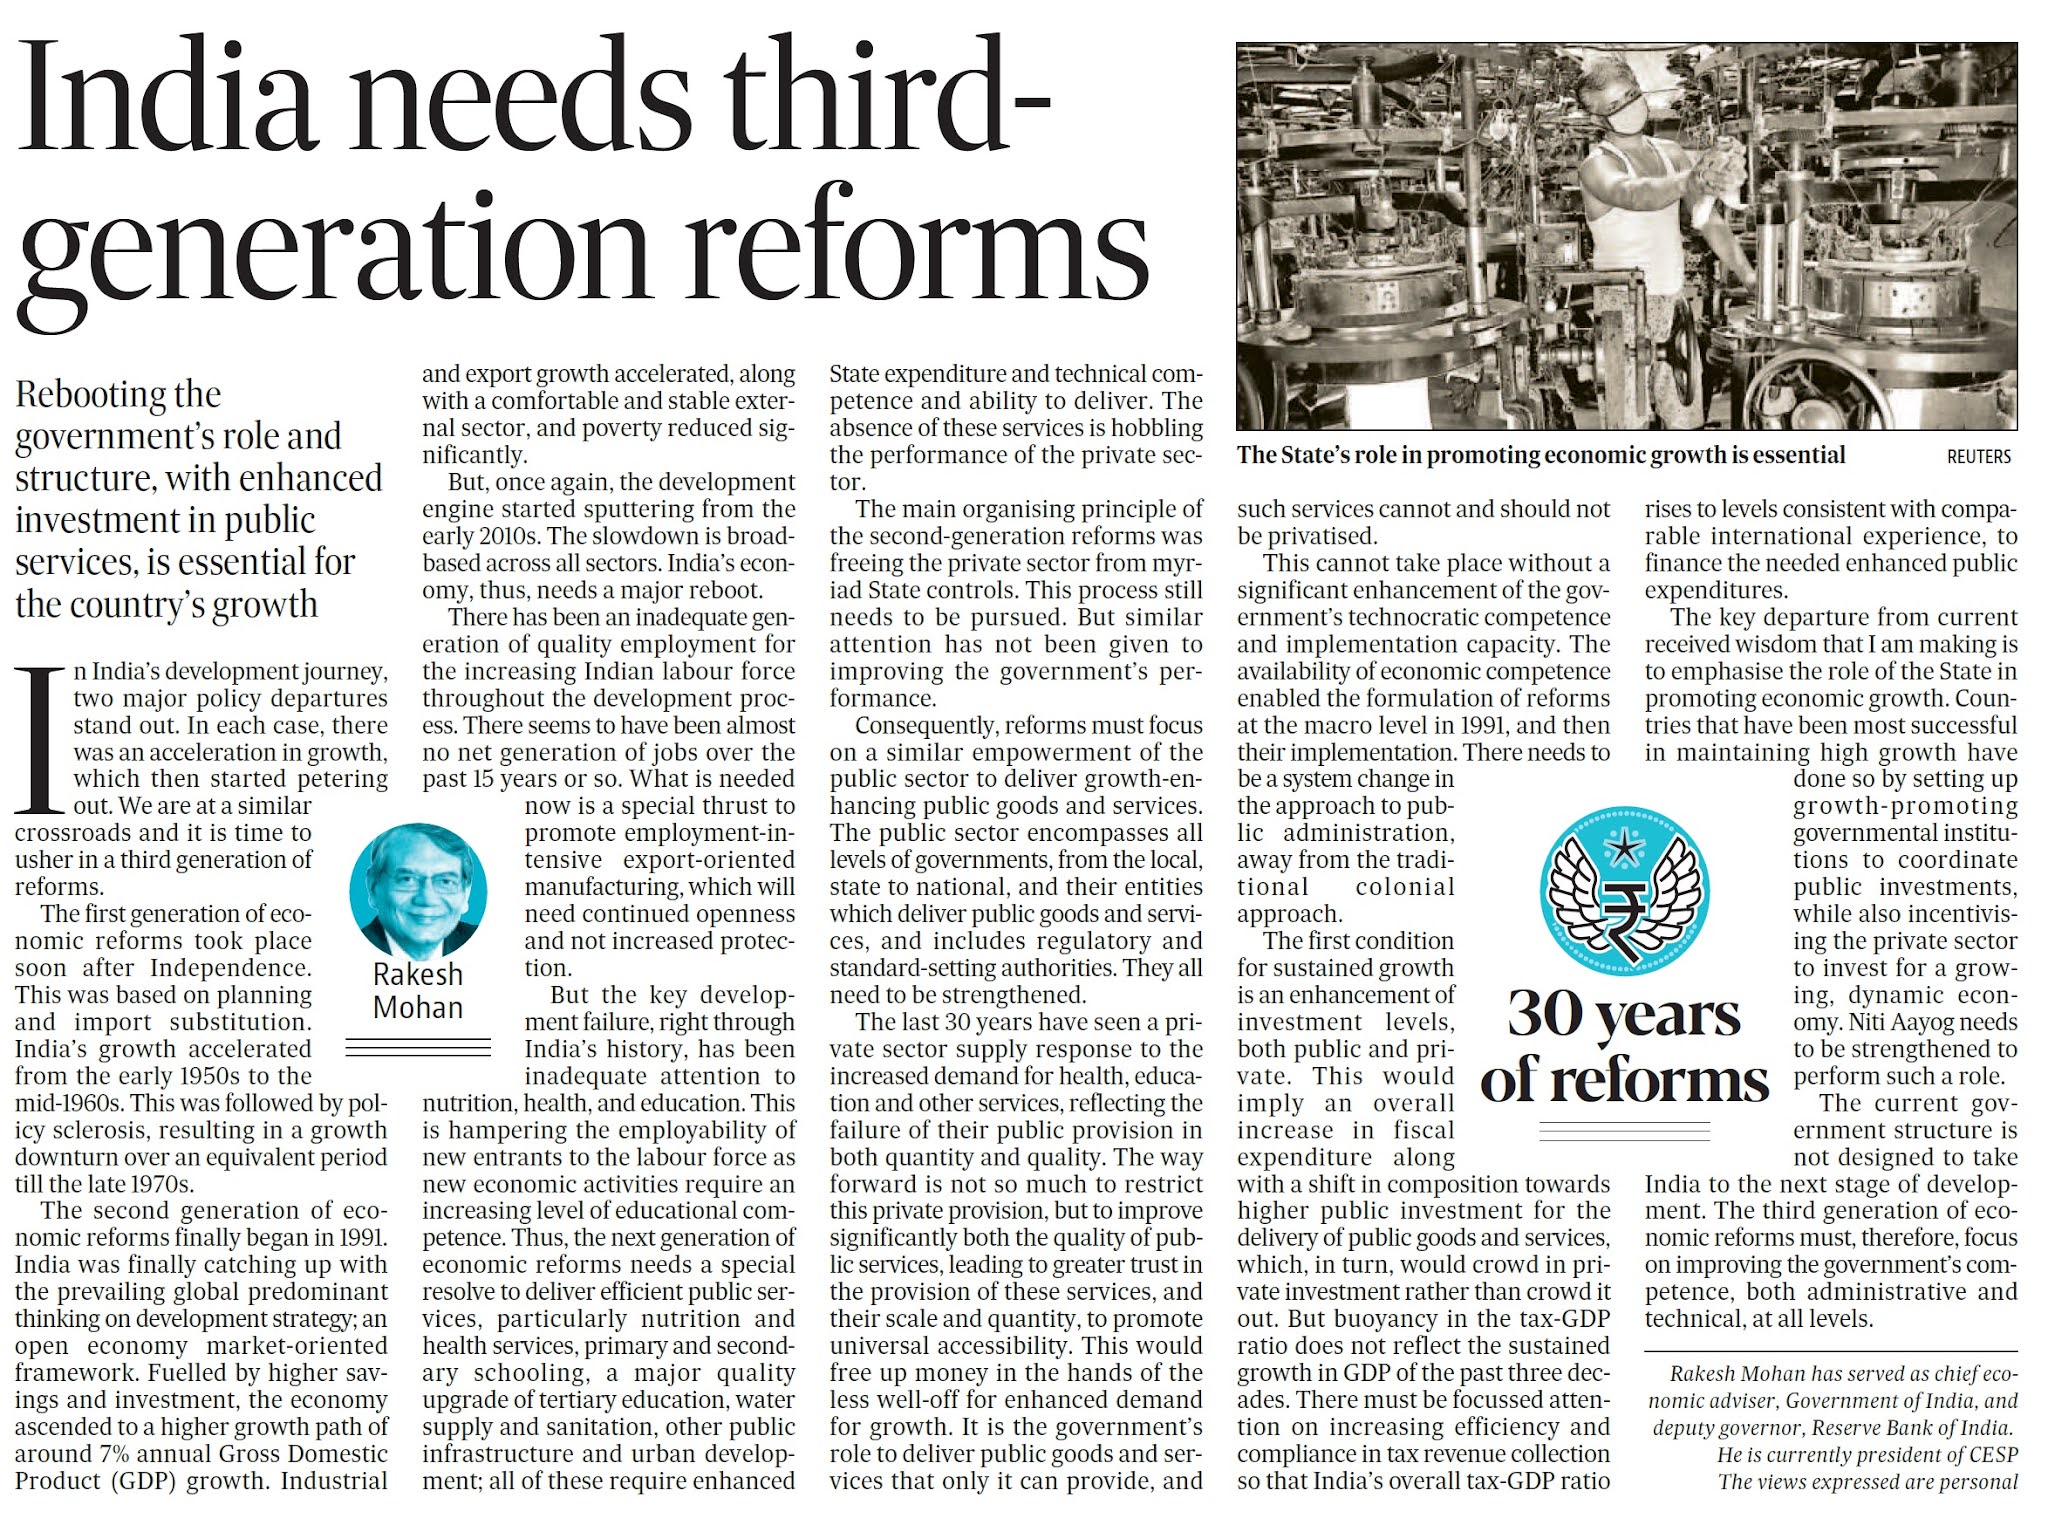 India needs third-generation reforms